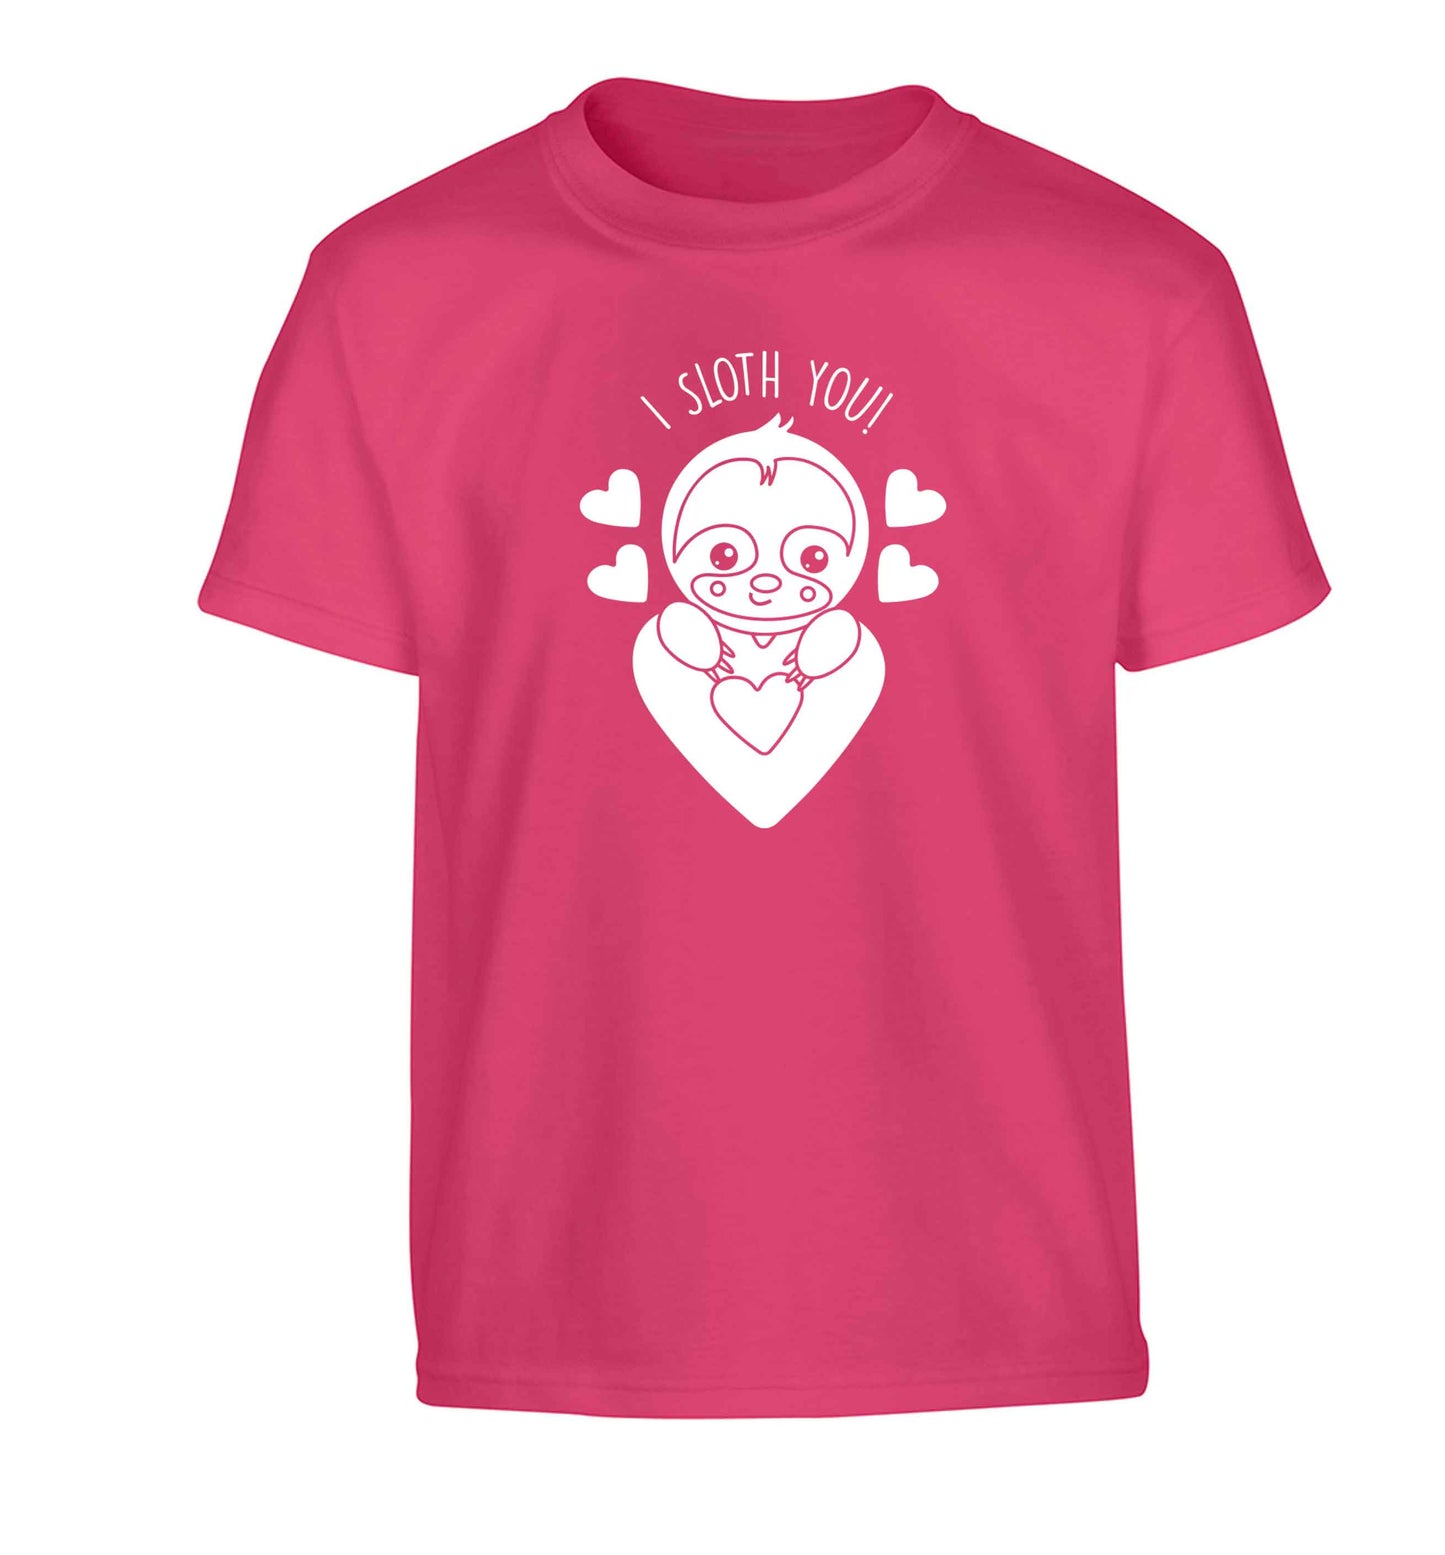 I sloth you Children's pink Tshirt 12-13 Years